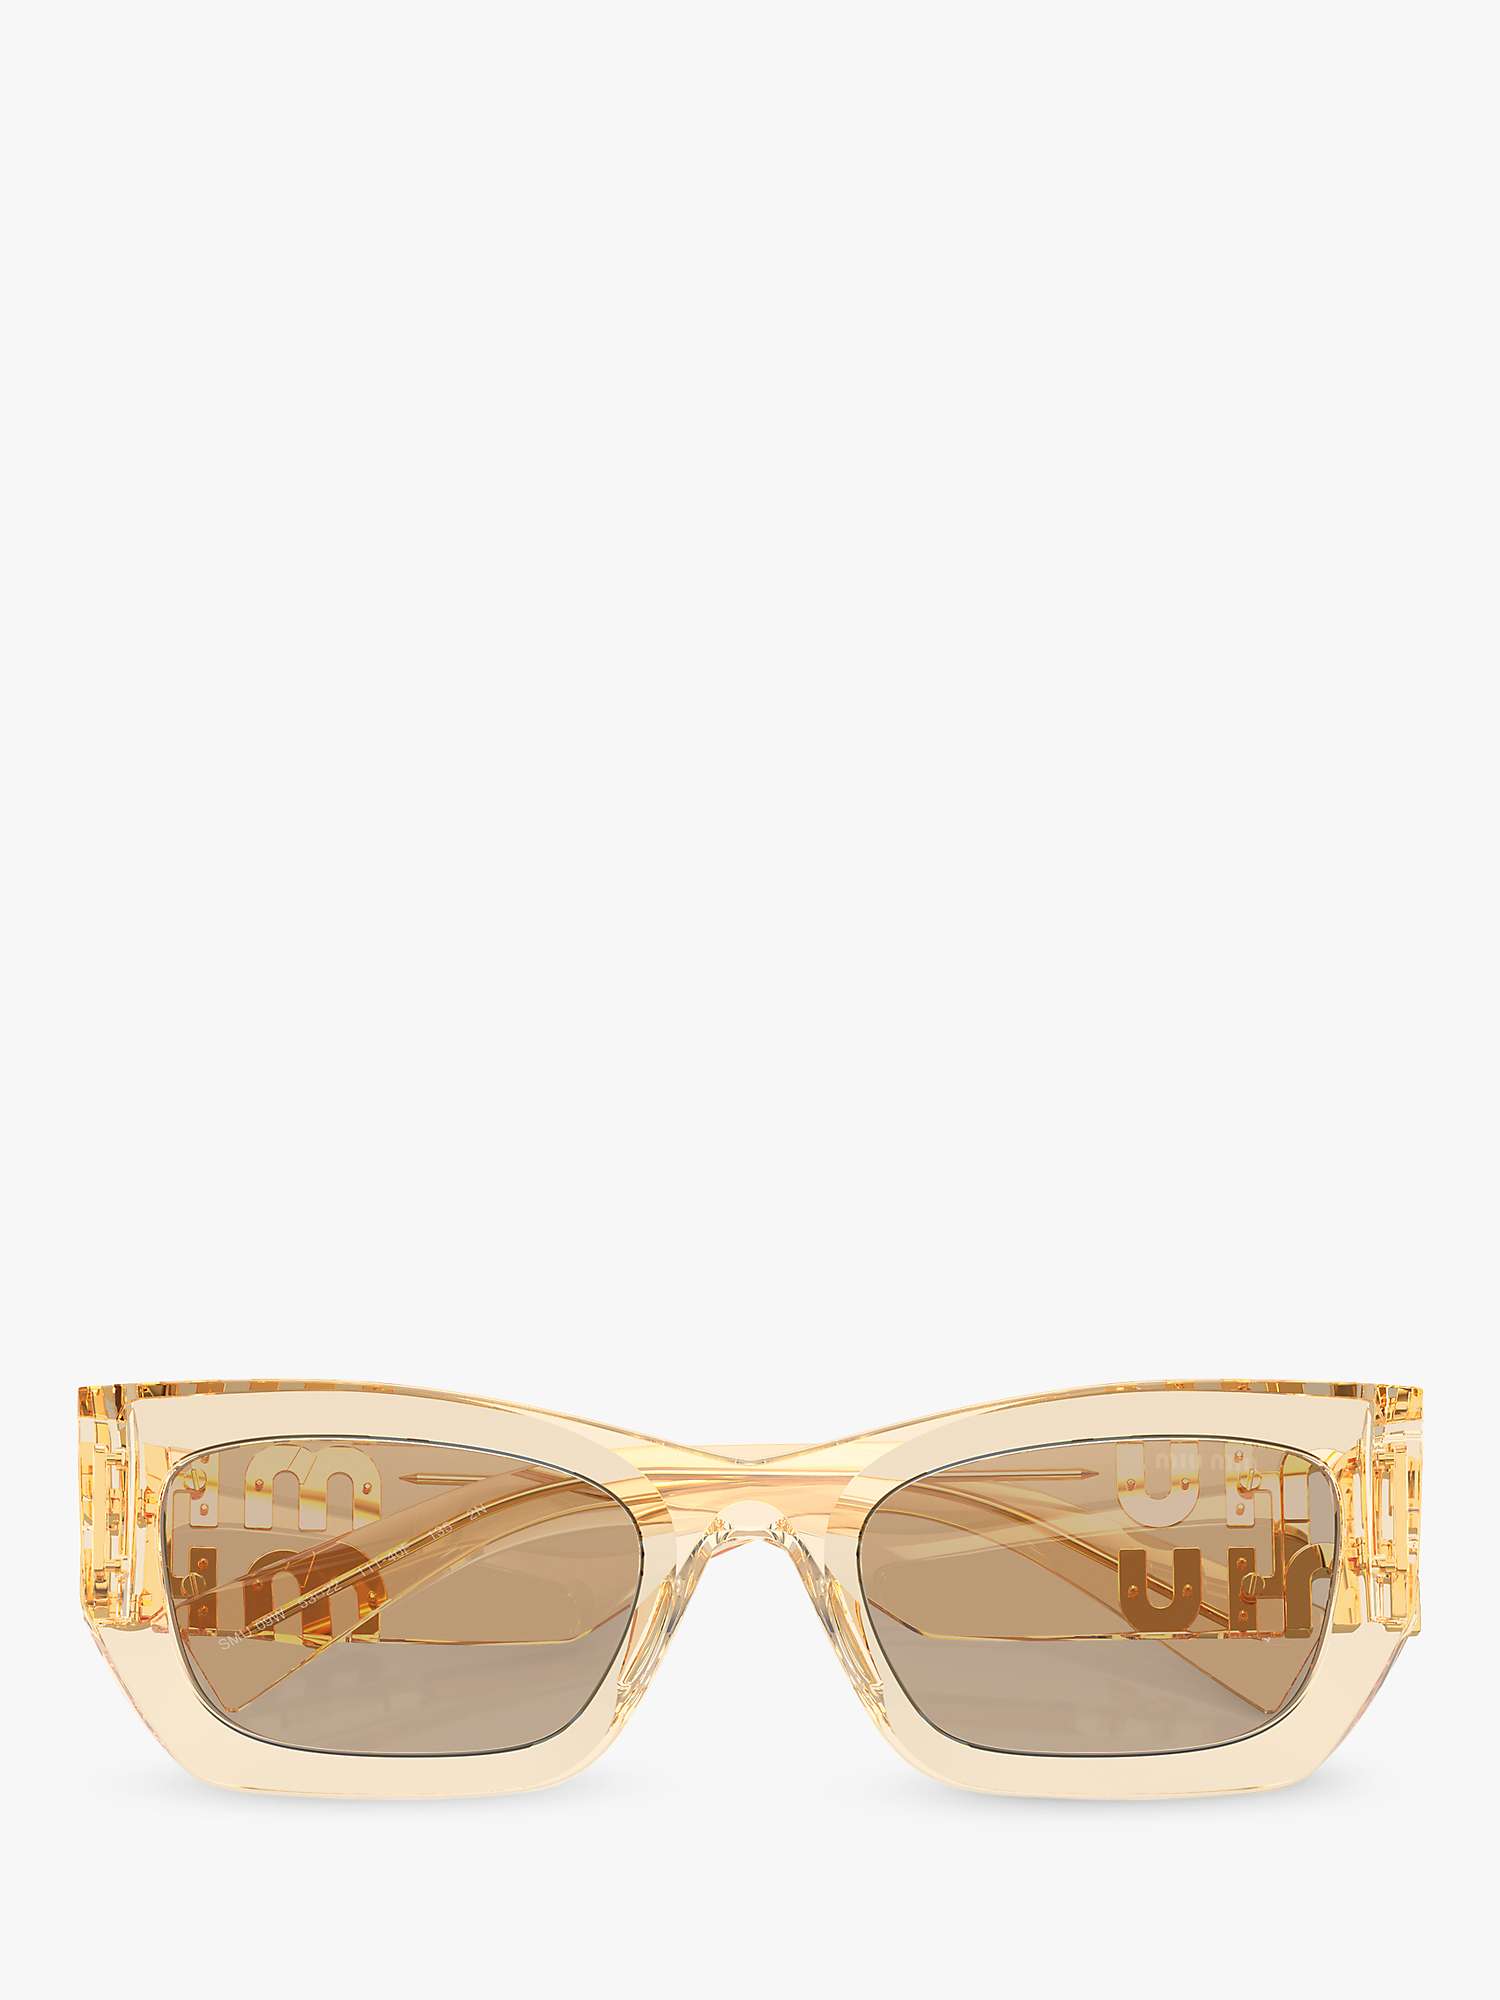 Buy Miu Miu MU 09WS Women's Rectangular Sunglasses, Sand Transparent/Brown Online at johnlewis.com